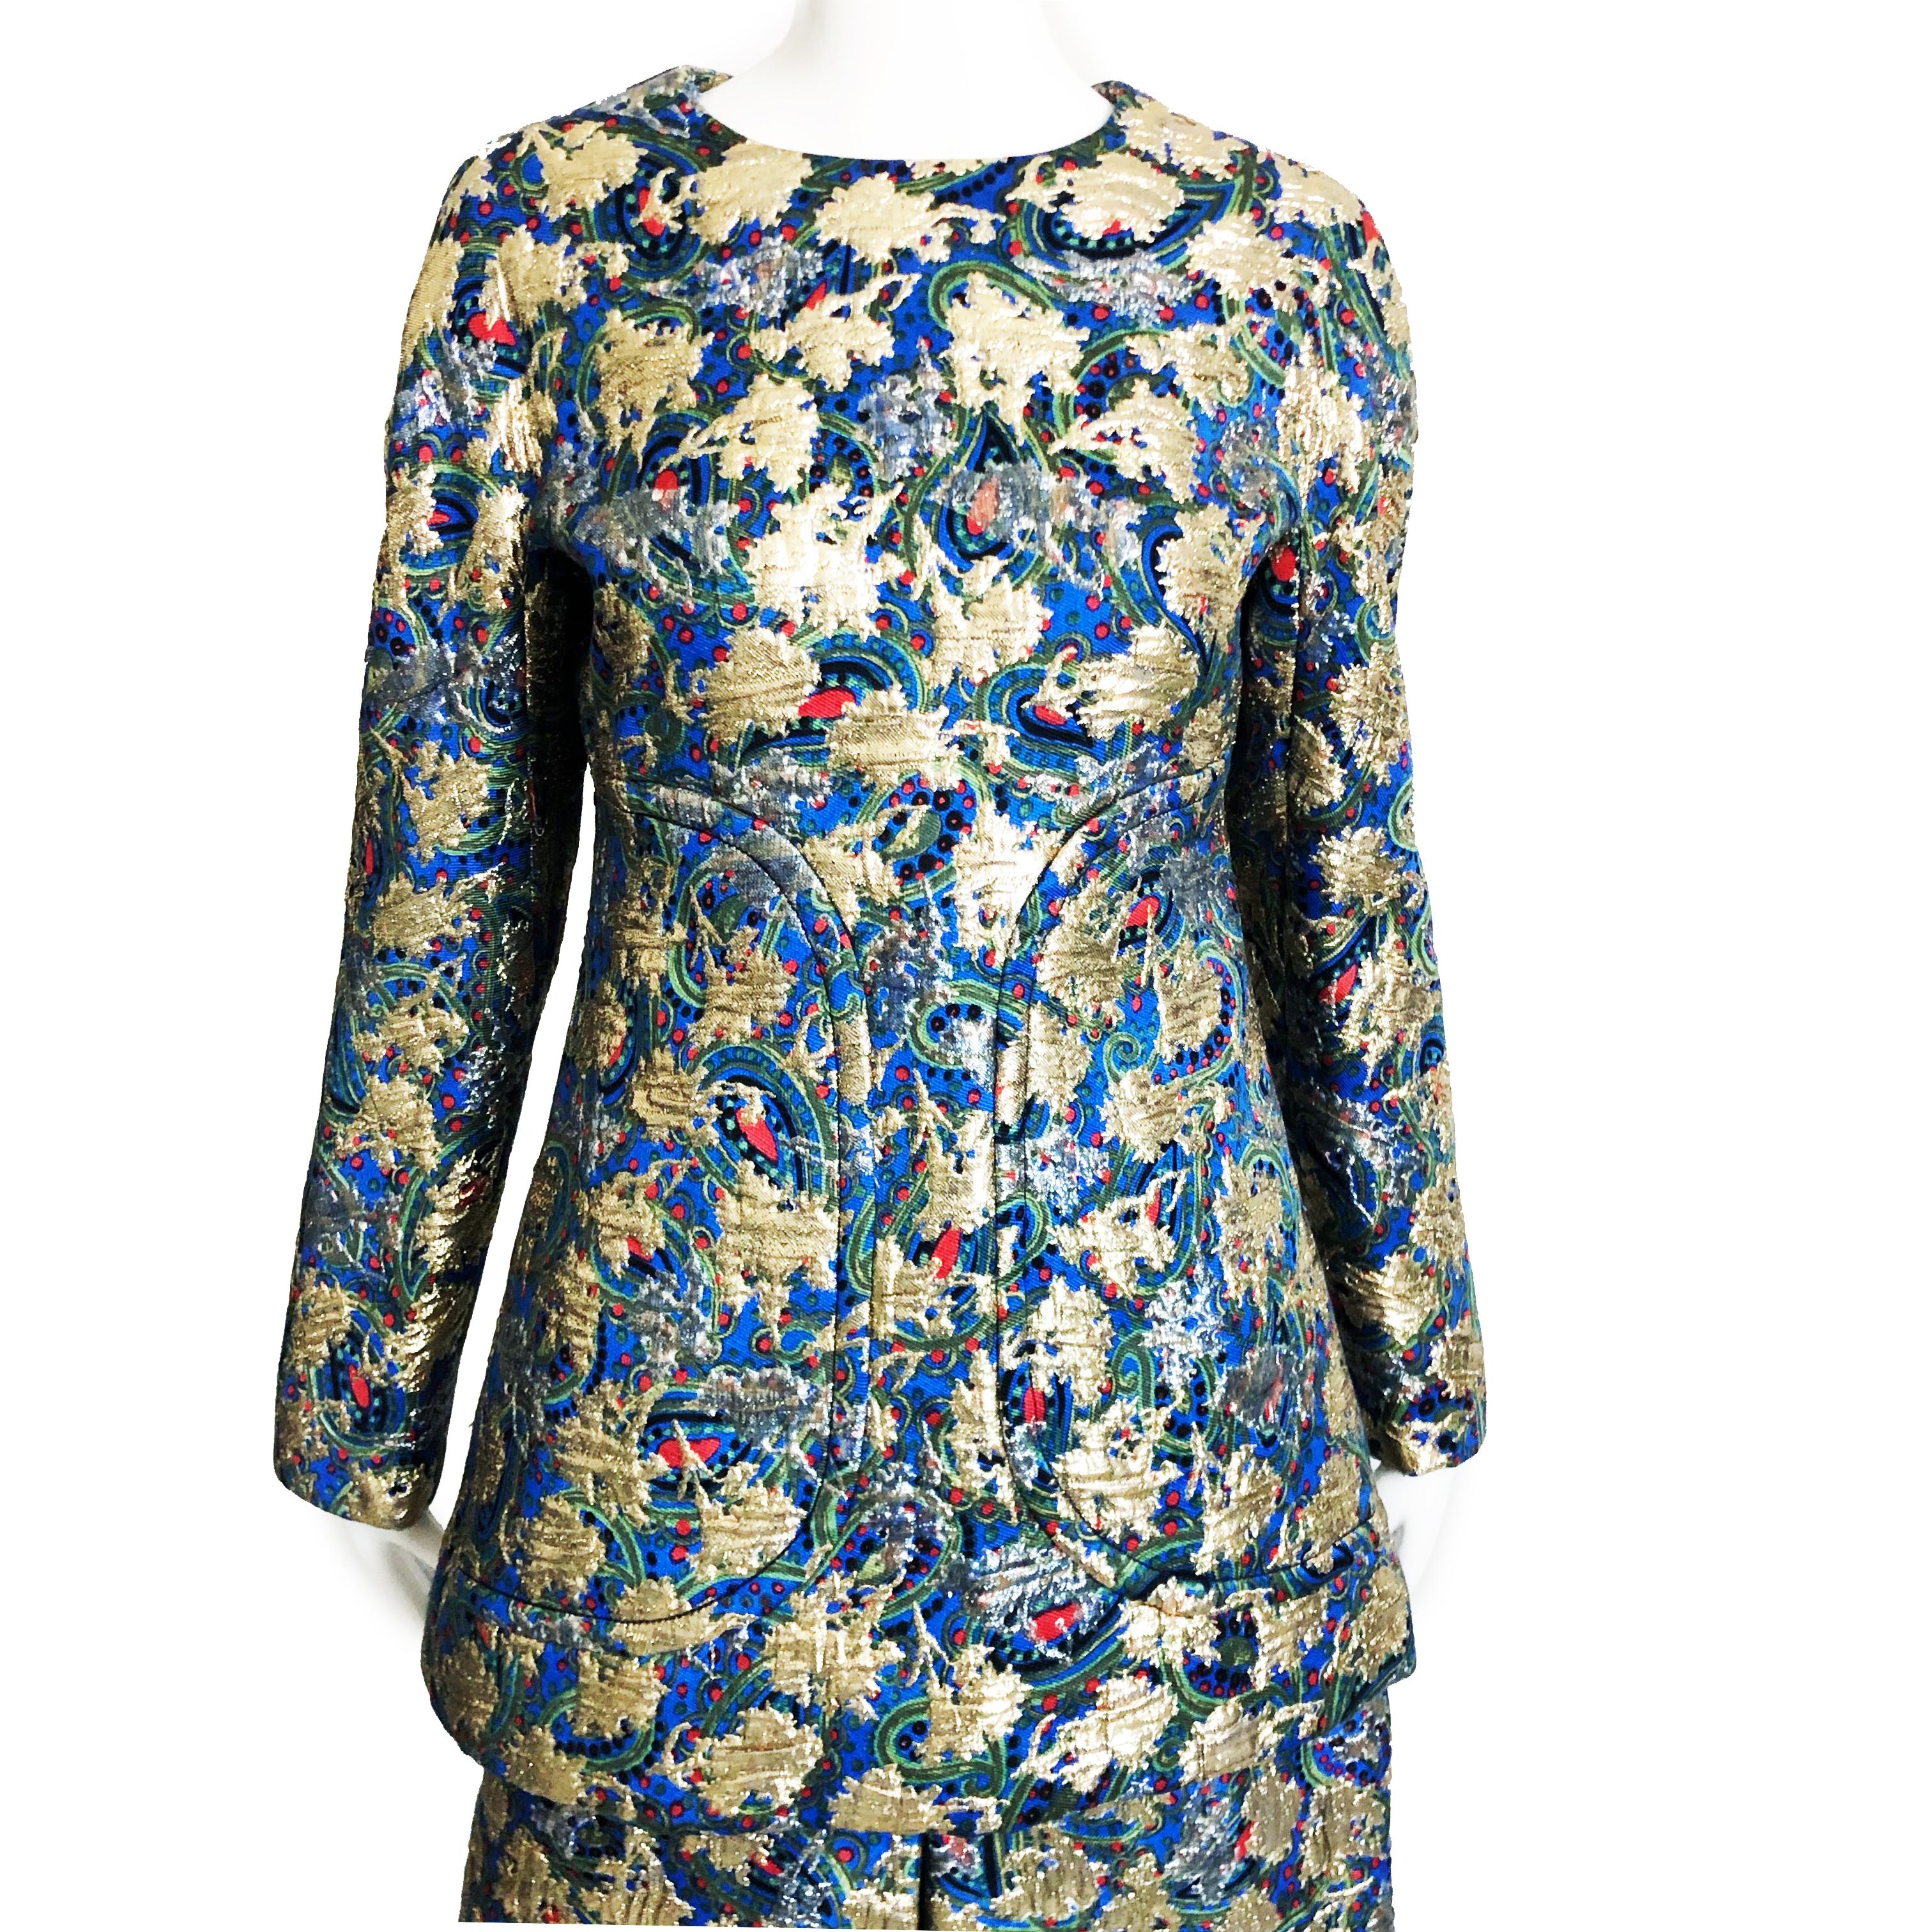 James Galanos Metallic Brocade Suit 3pc Top, Long Vest and Skirt Vintage 60s M 3